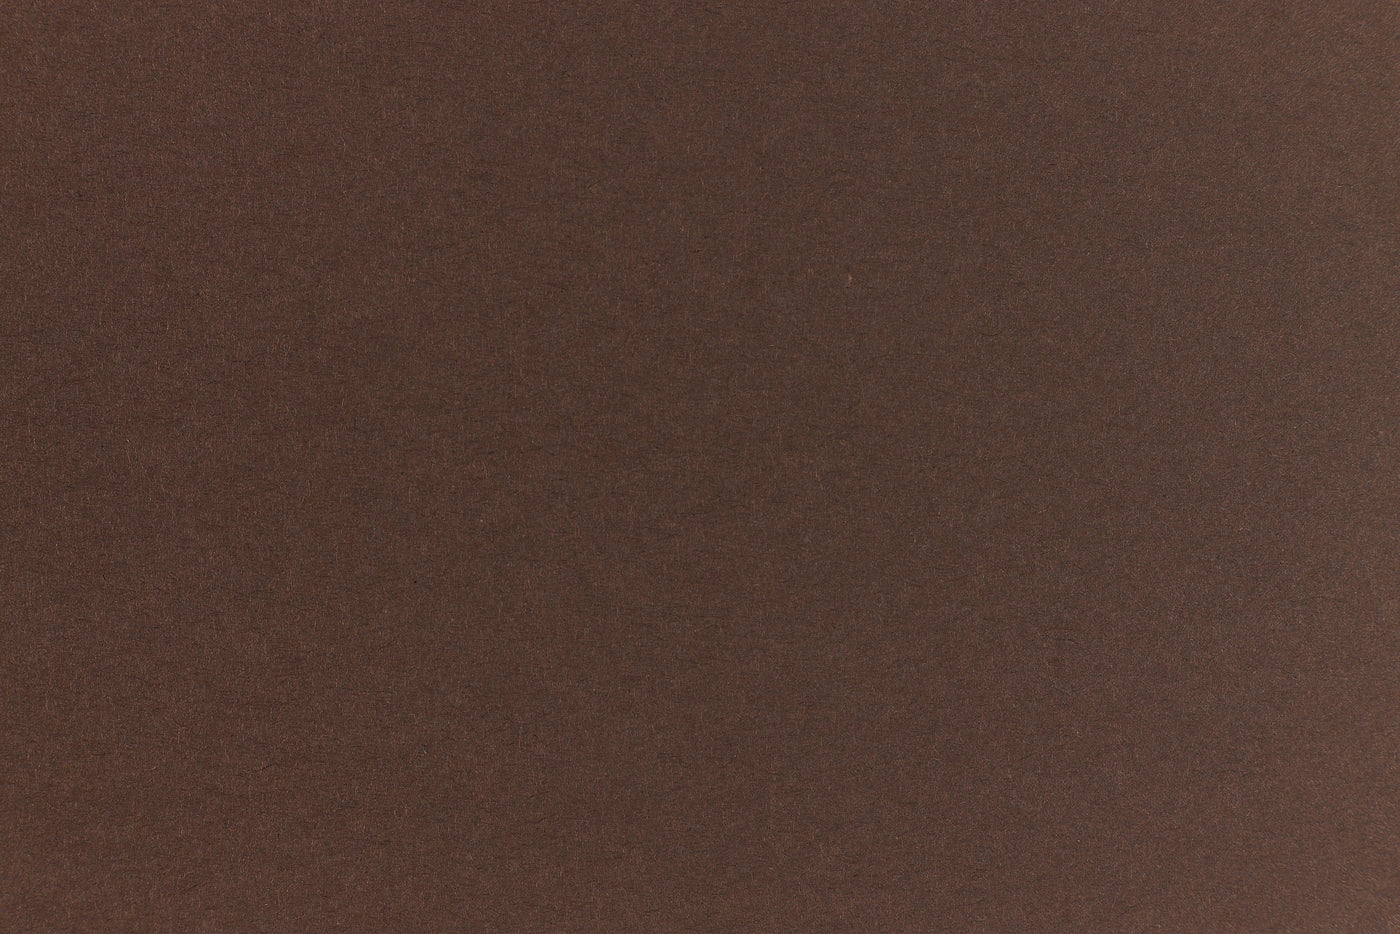 A deep and dark brown-black paper viewed in close detail. 